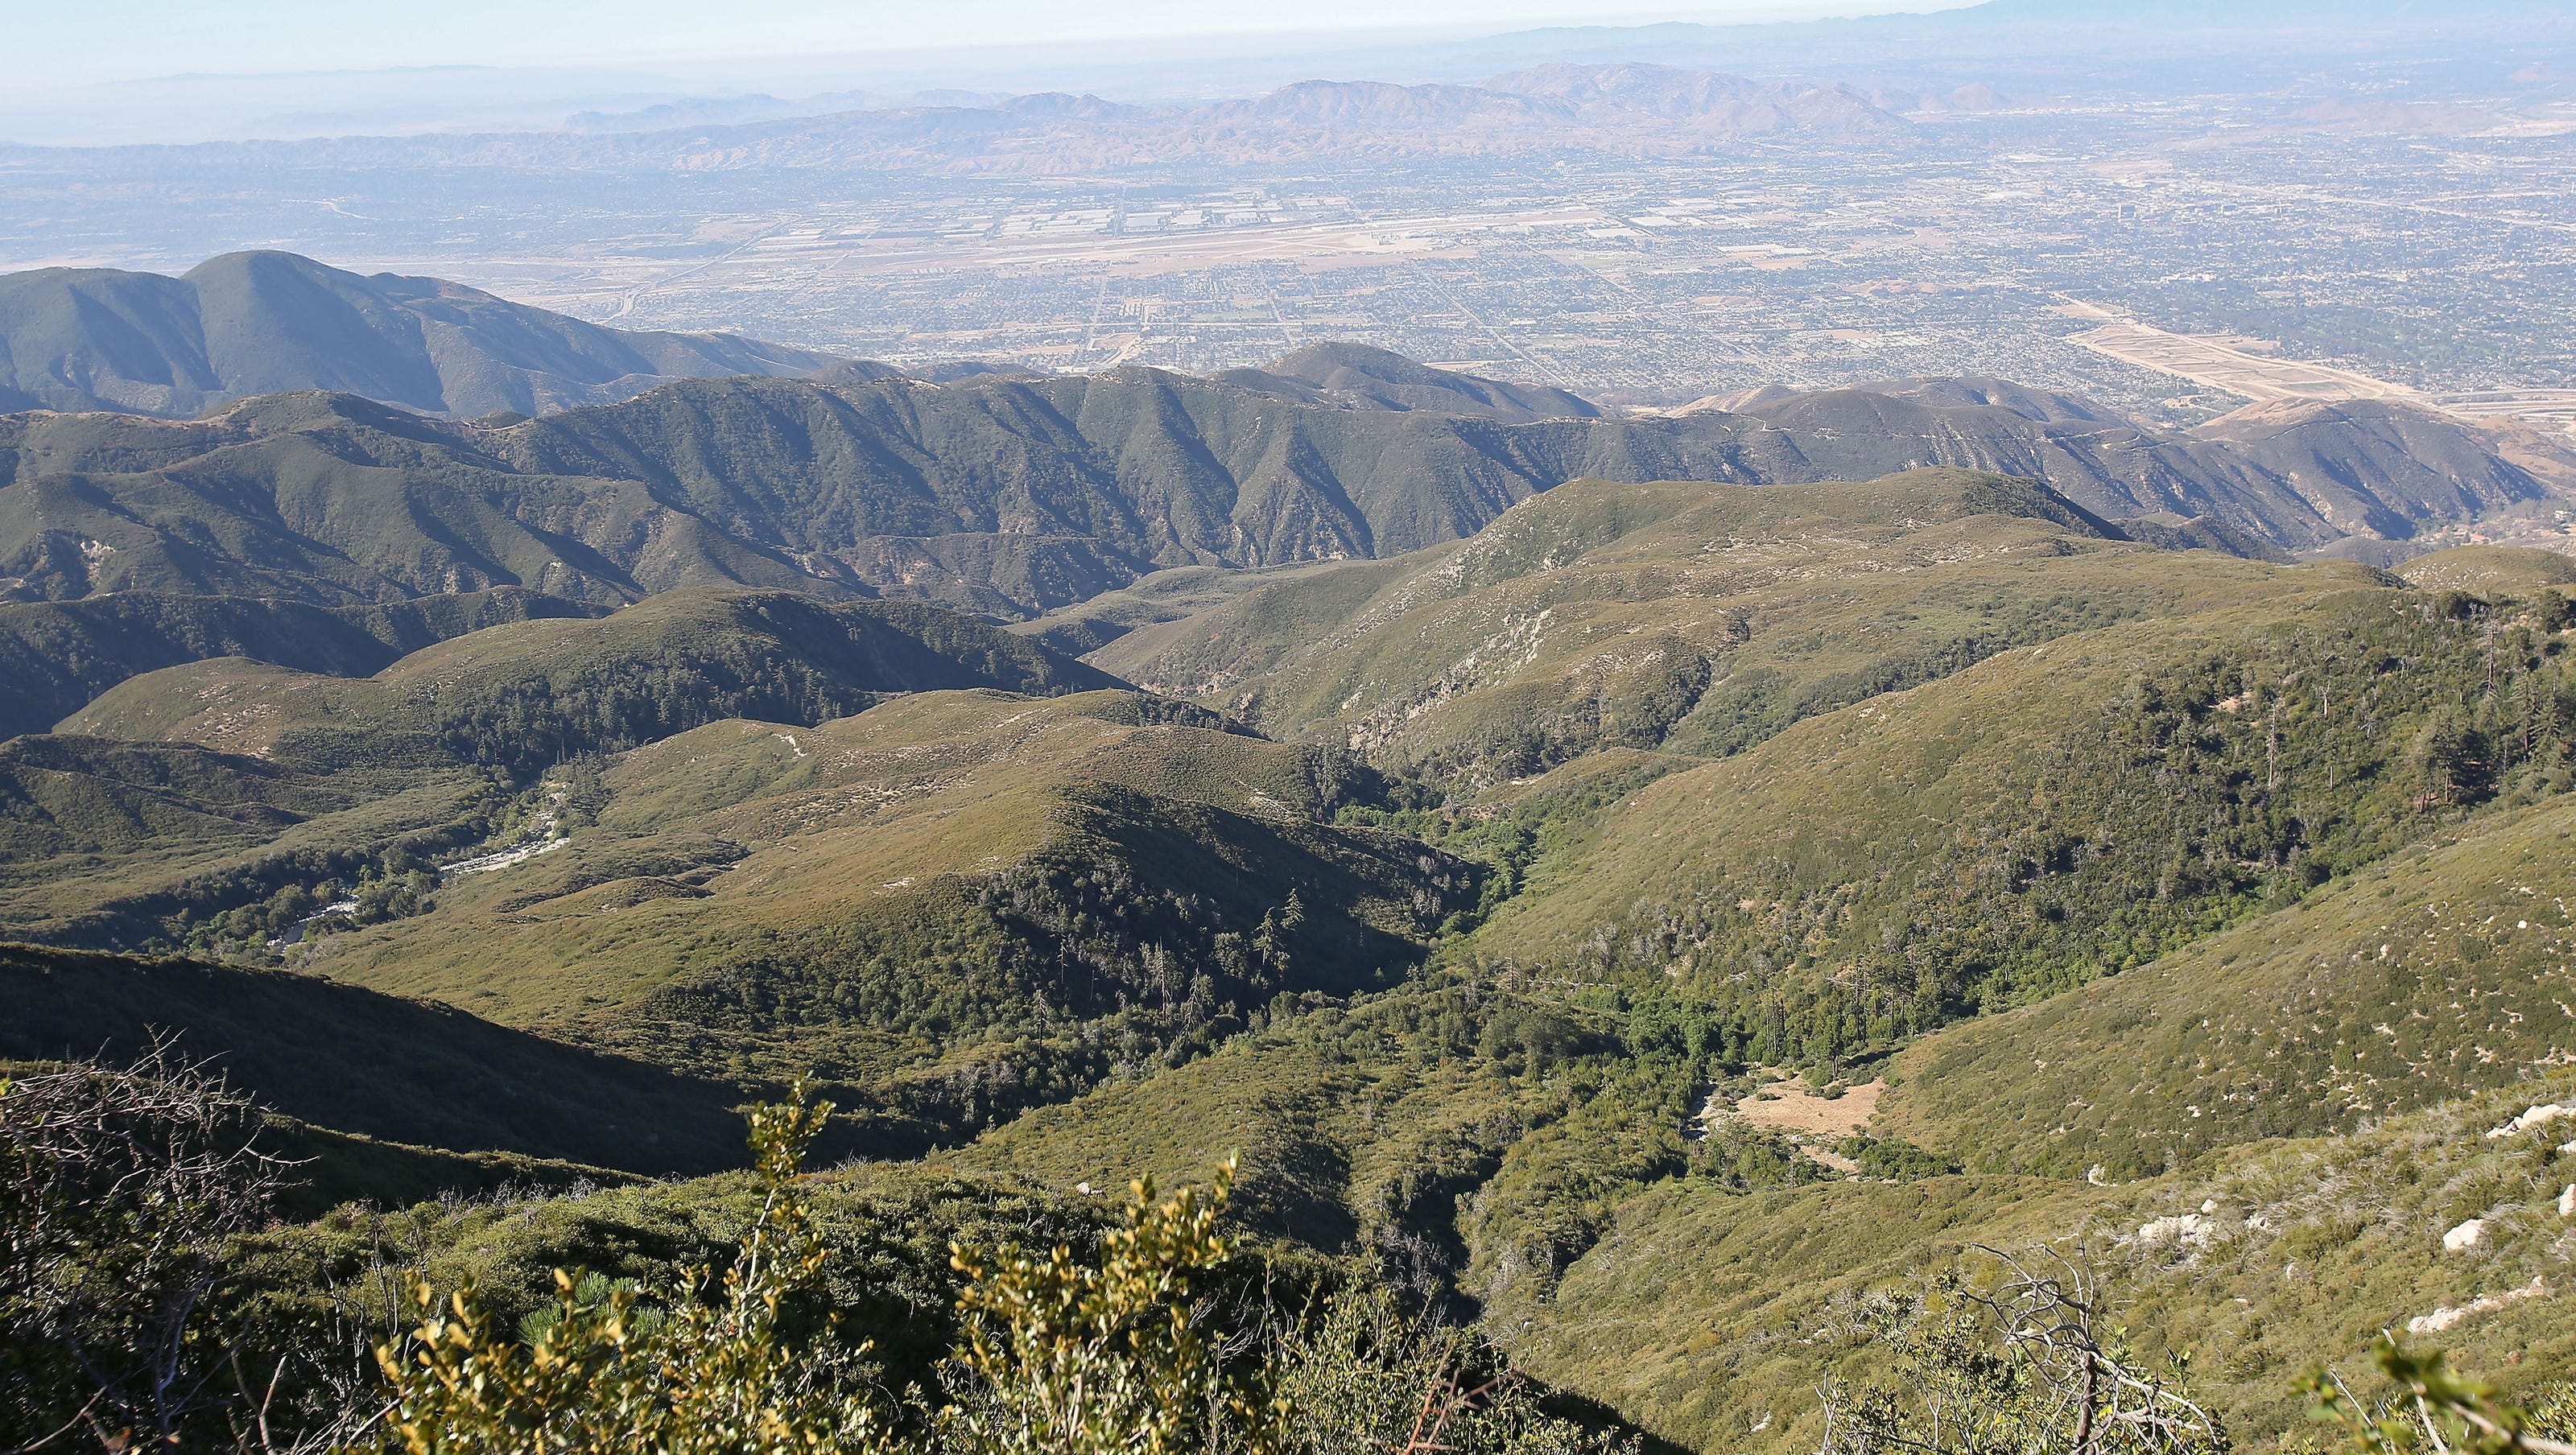 San Manuel tribe discusses possible land deal with San Bernardino National Forest - Desert Sun